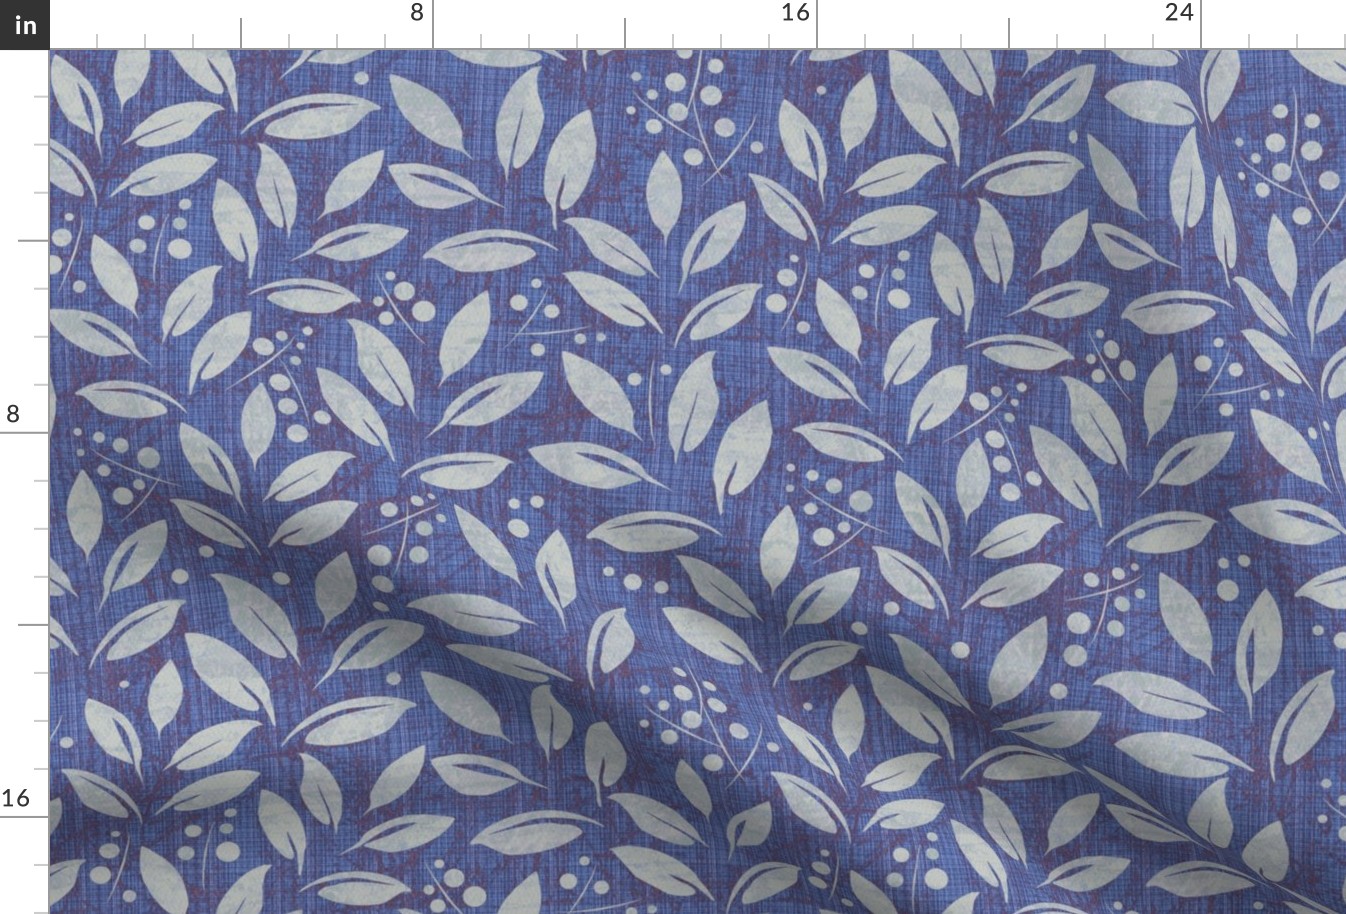 blueberry_plant_texture